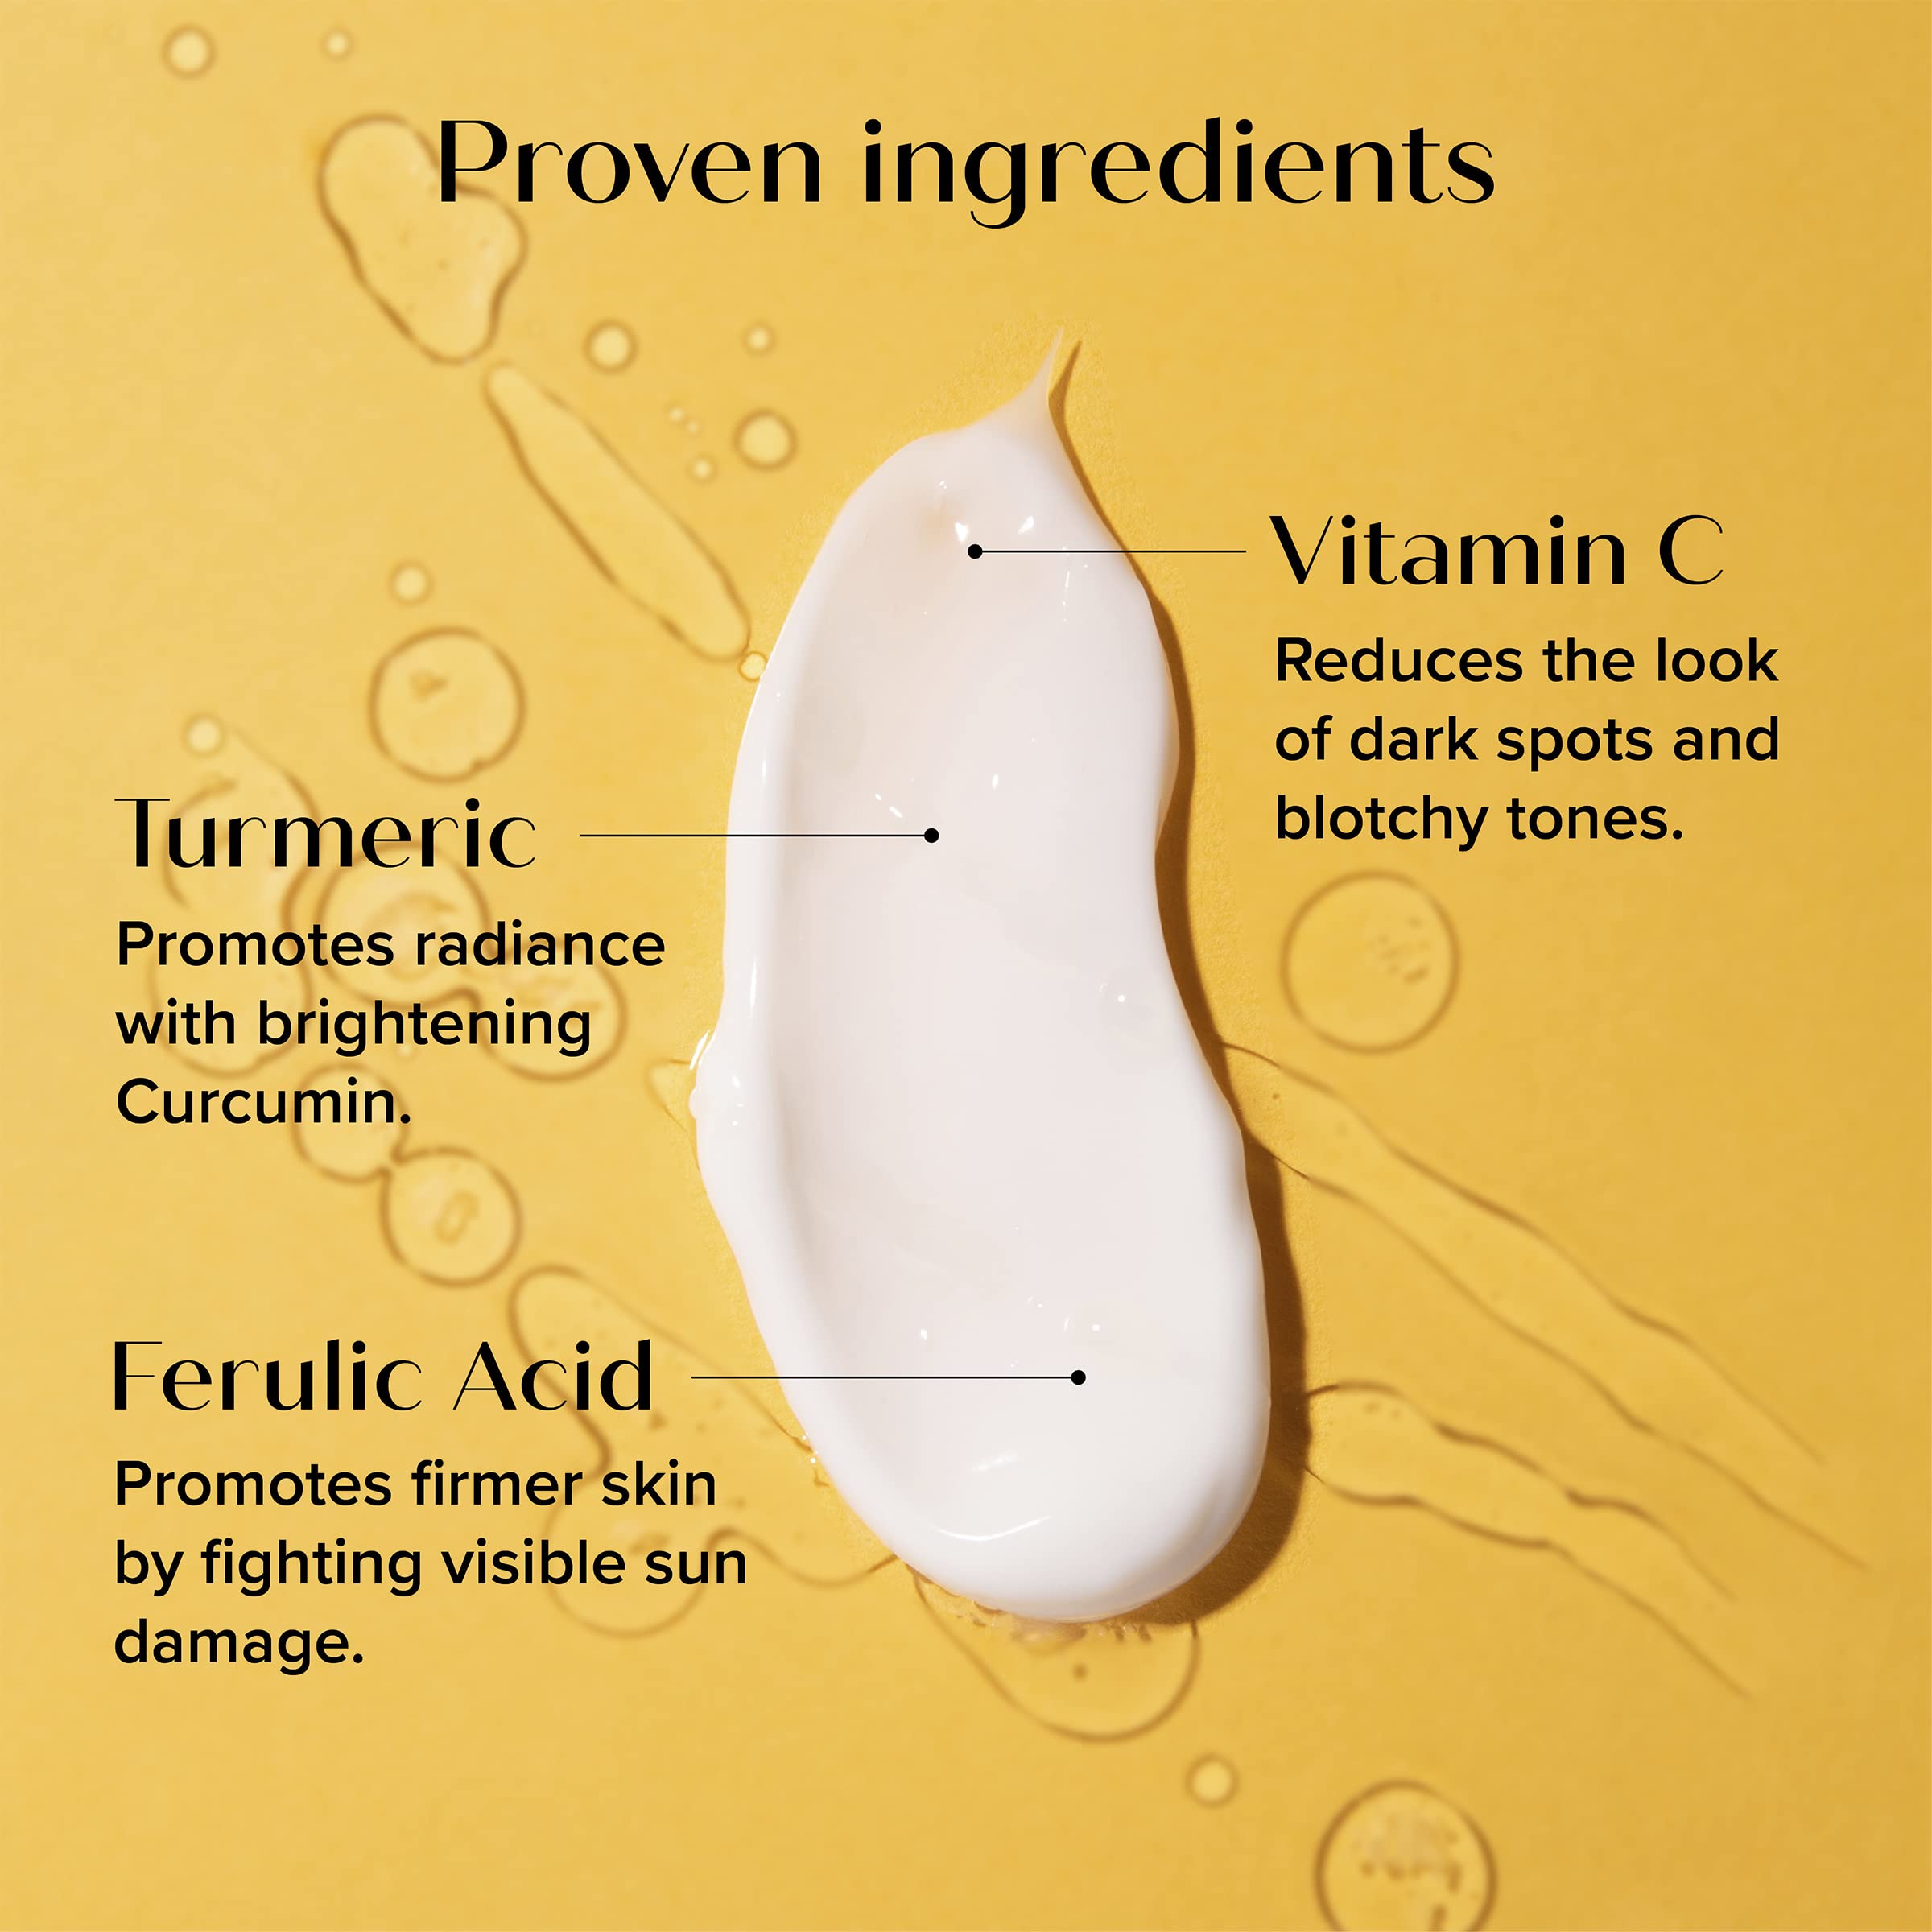 Medix 5.5 Retinol Body Cream + Vitamin C Lotion Anti Aging Moisturizer Skin Care Set, Retinol Lotion Targets Wrinkles, Sagging Skin, Crepey Skin, Vitamin C Cream Brightens & Hydrates Dry Skin, Bundle